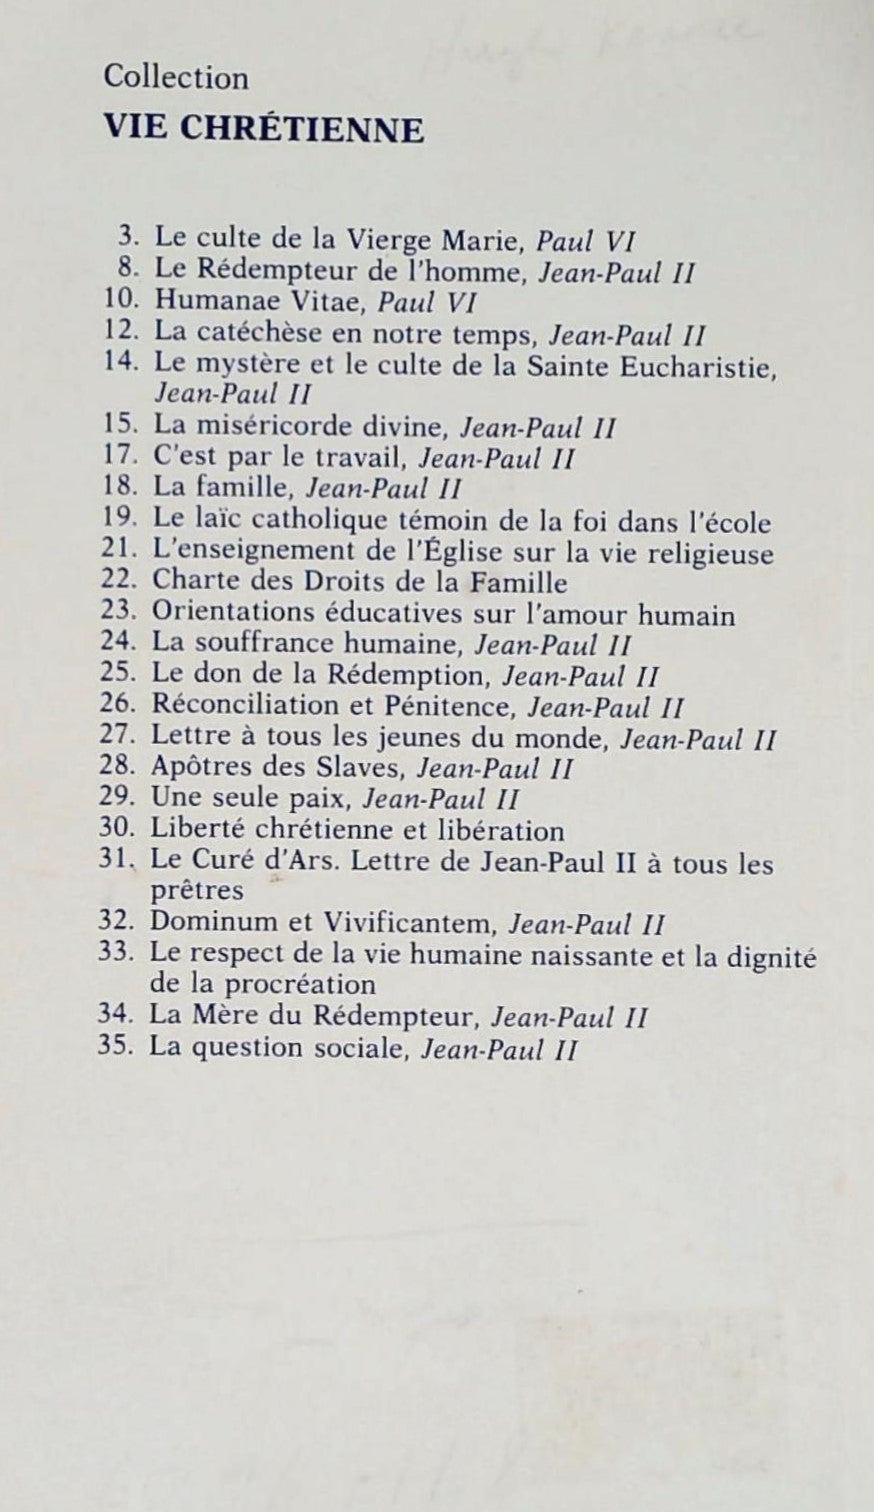 La question sociale - Lettre encyclique du souverain pontife Jean-Paul II (Jean-Paul II)